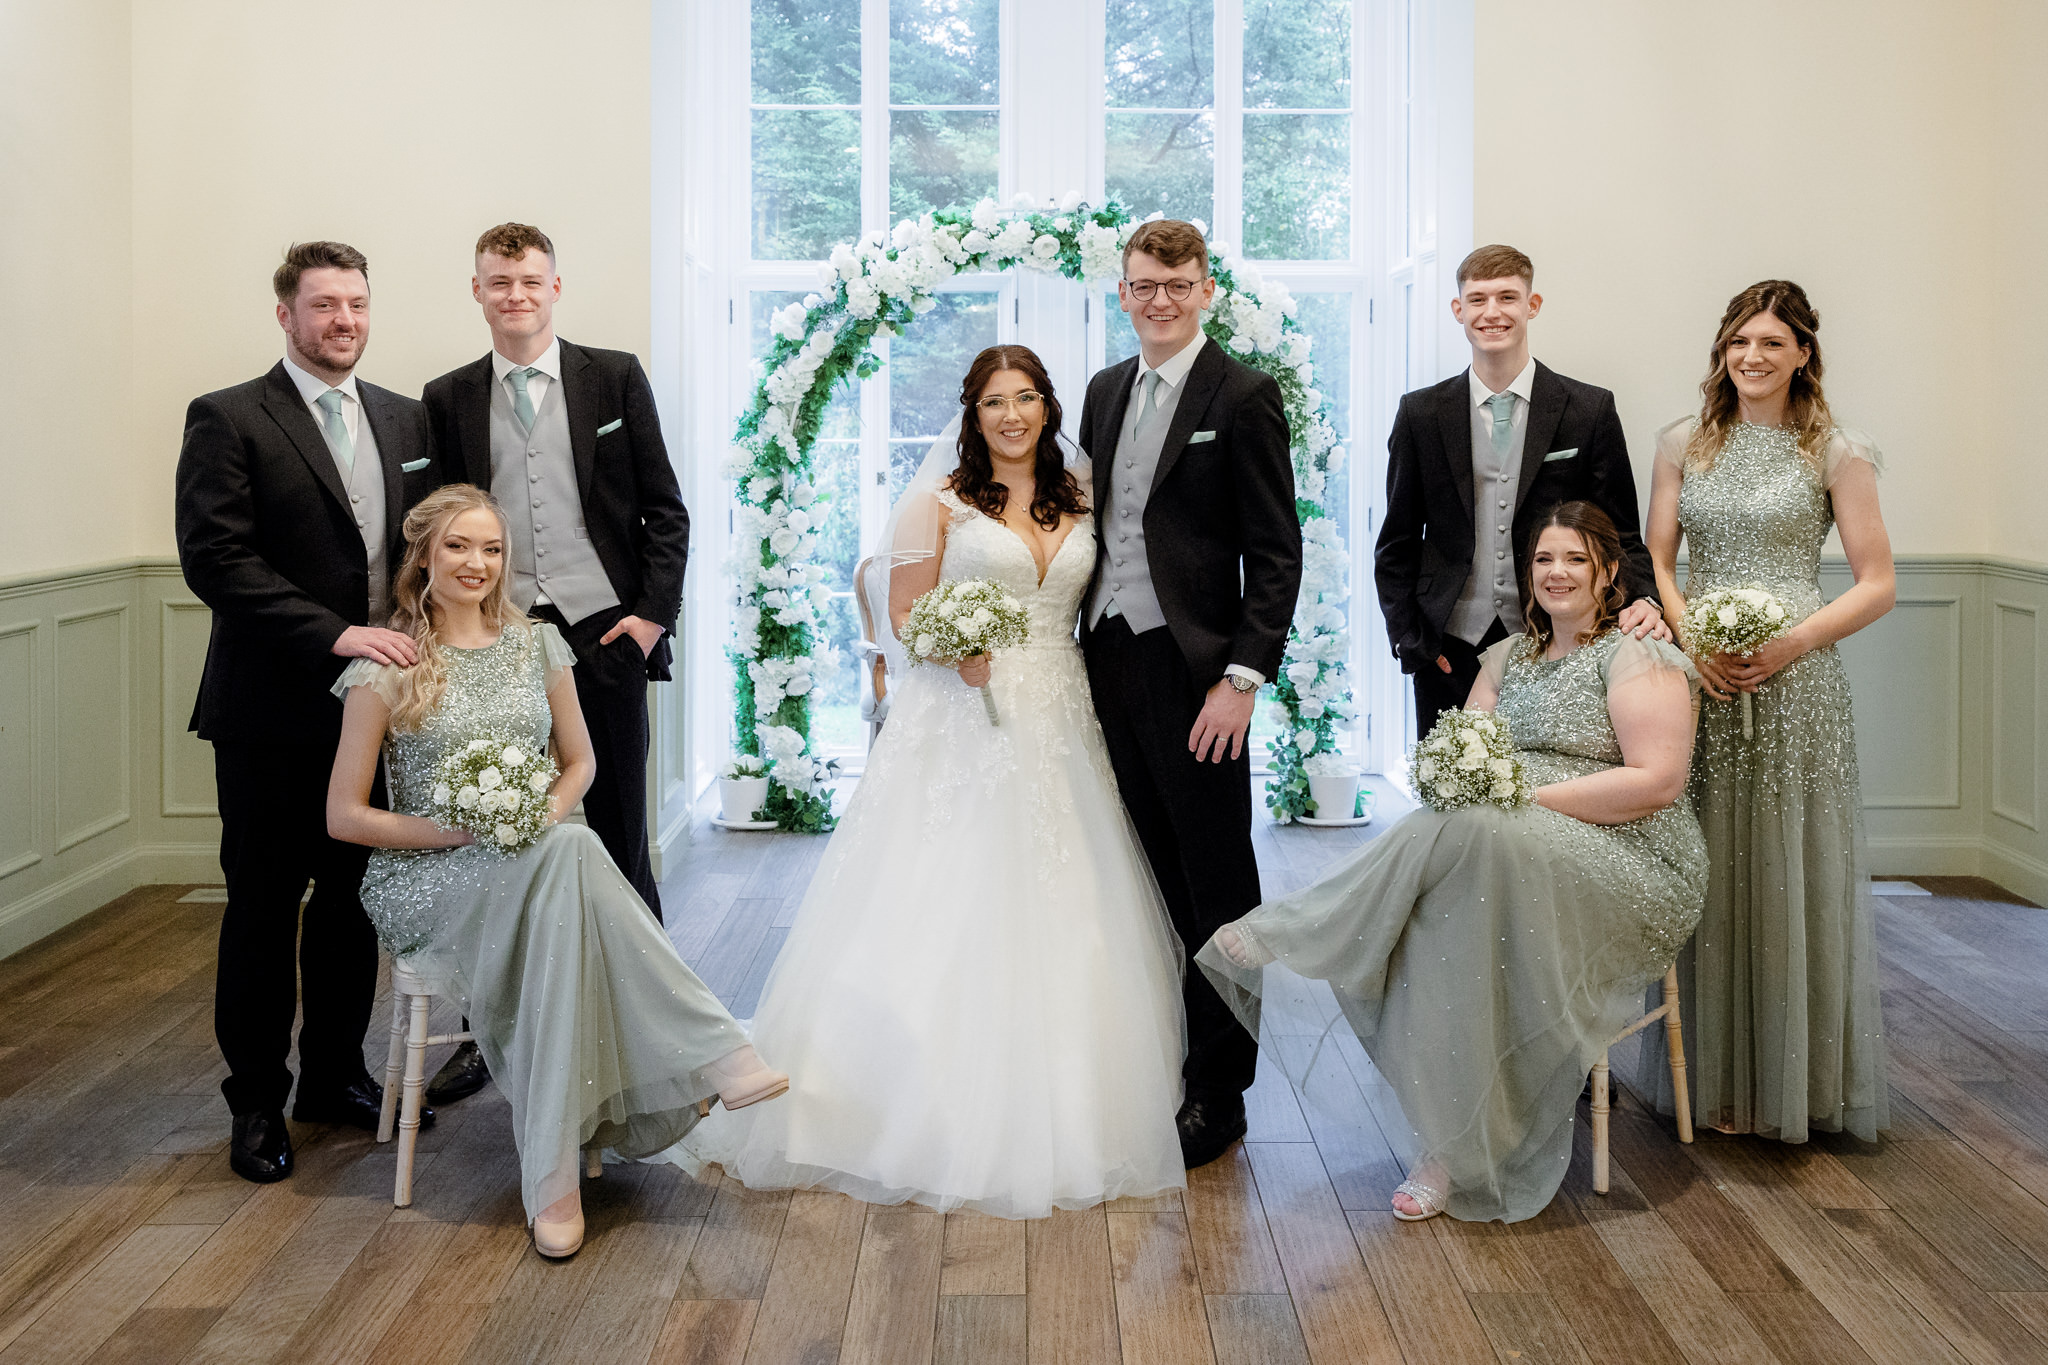 Bryngarw House Wedding Photography - Wedding group 